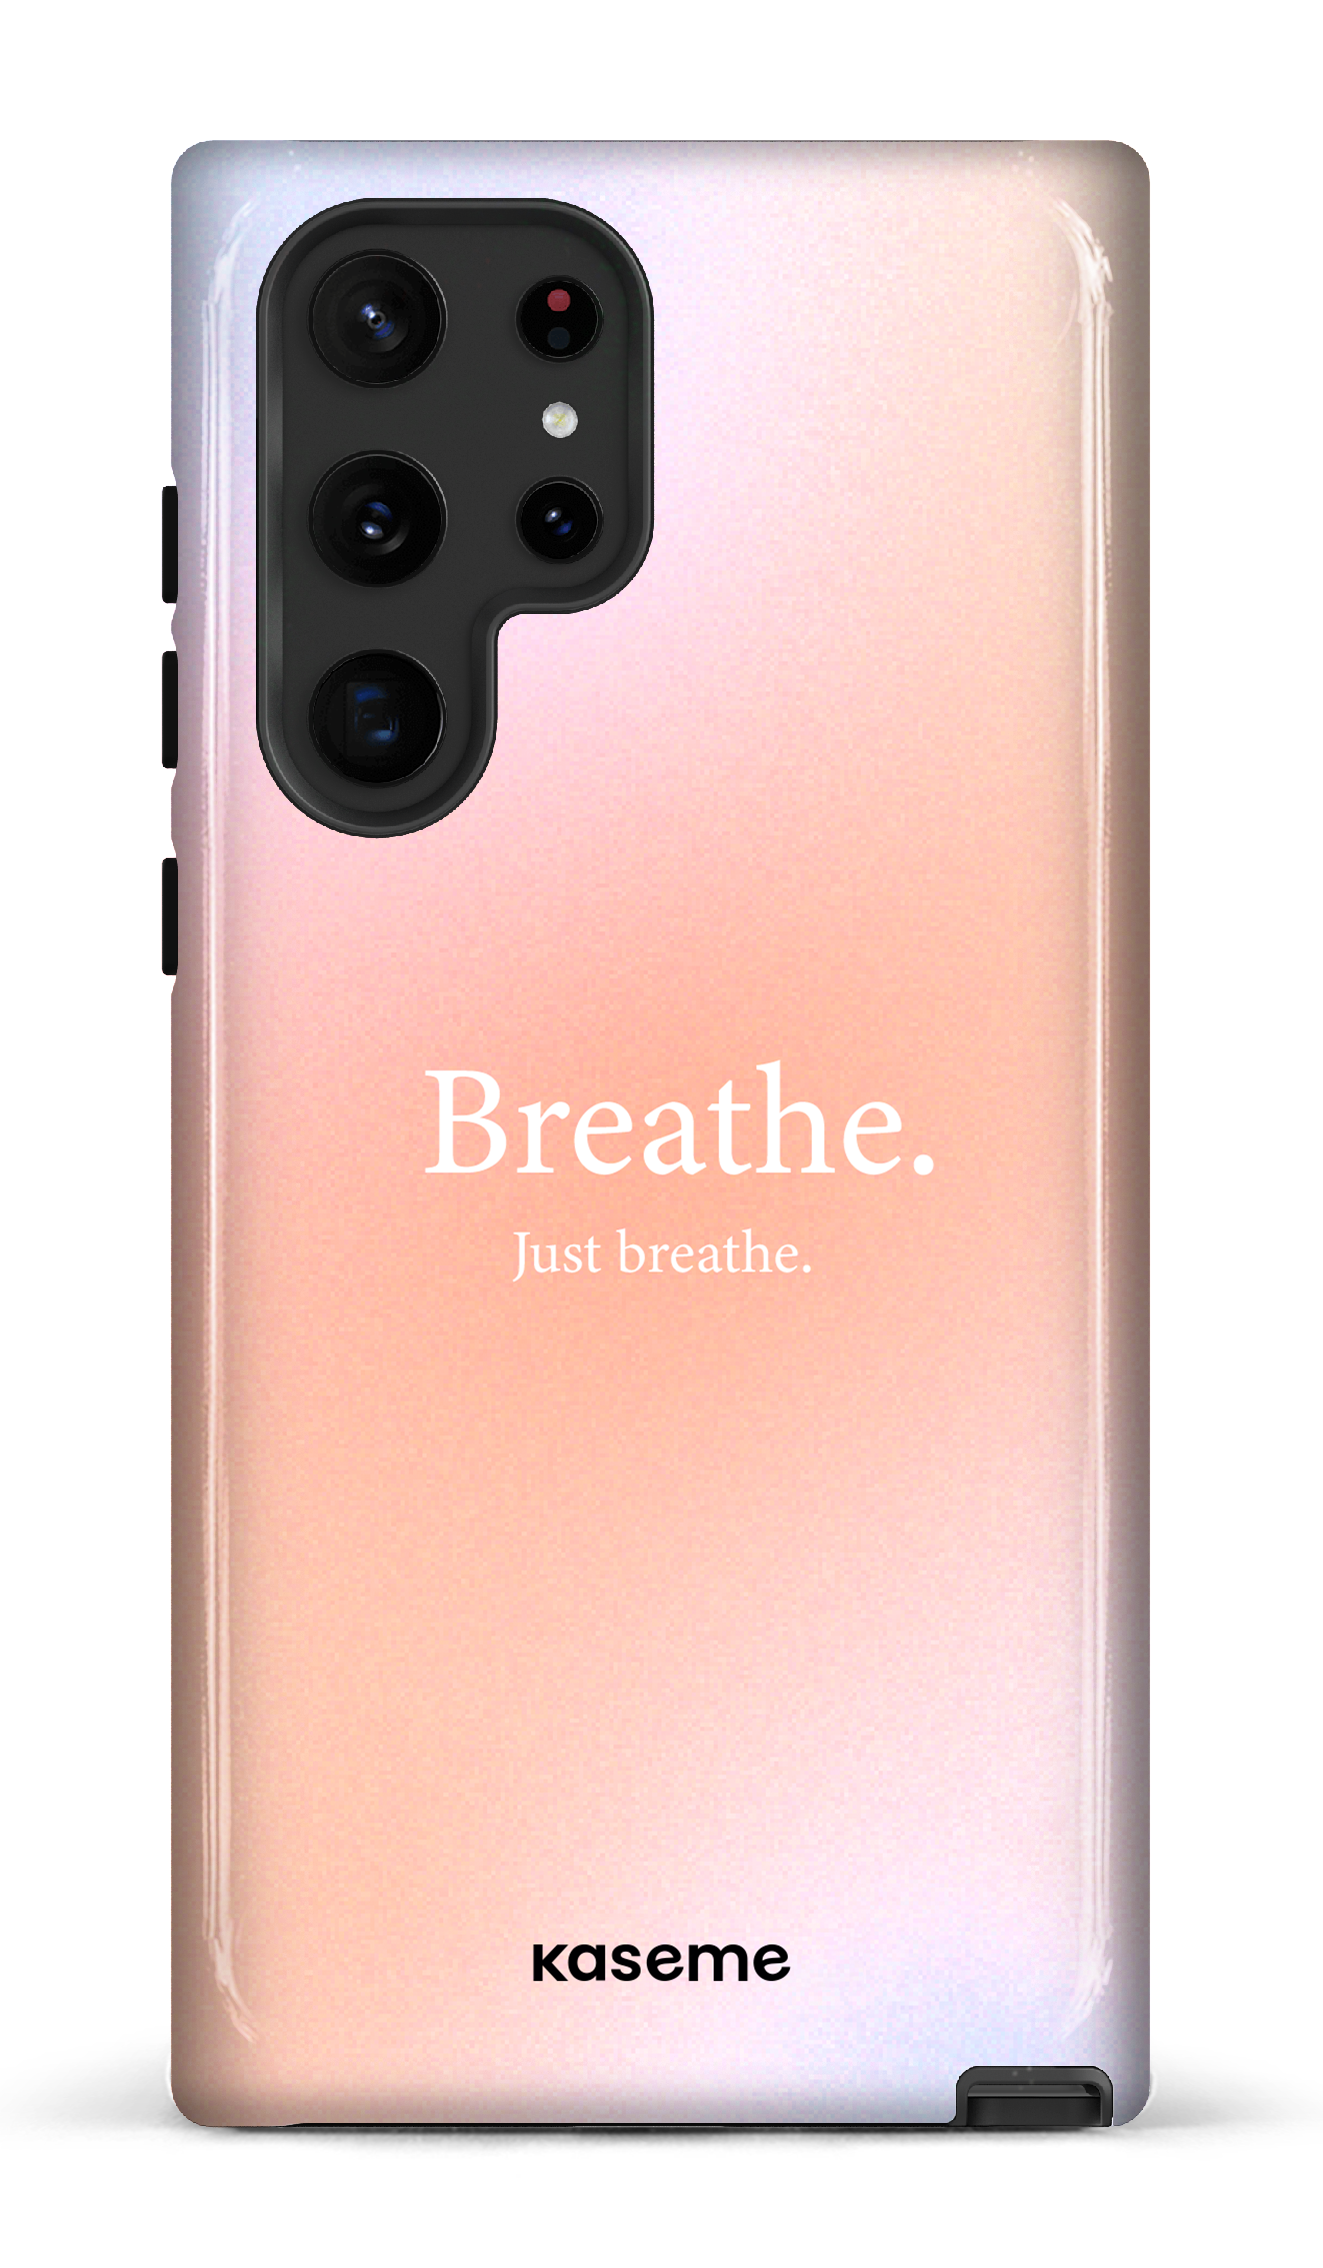 Just breathe - Galaxy S22 Ultra